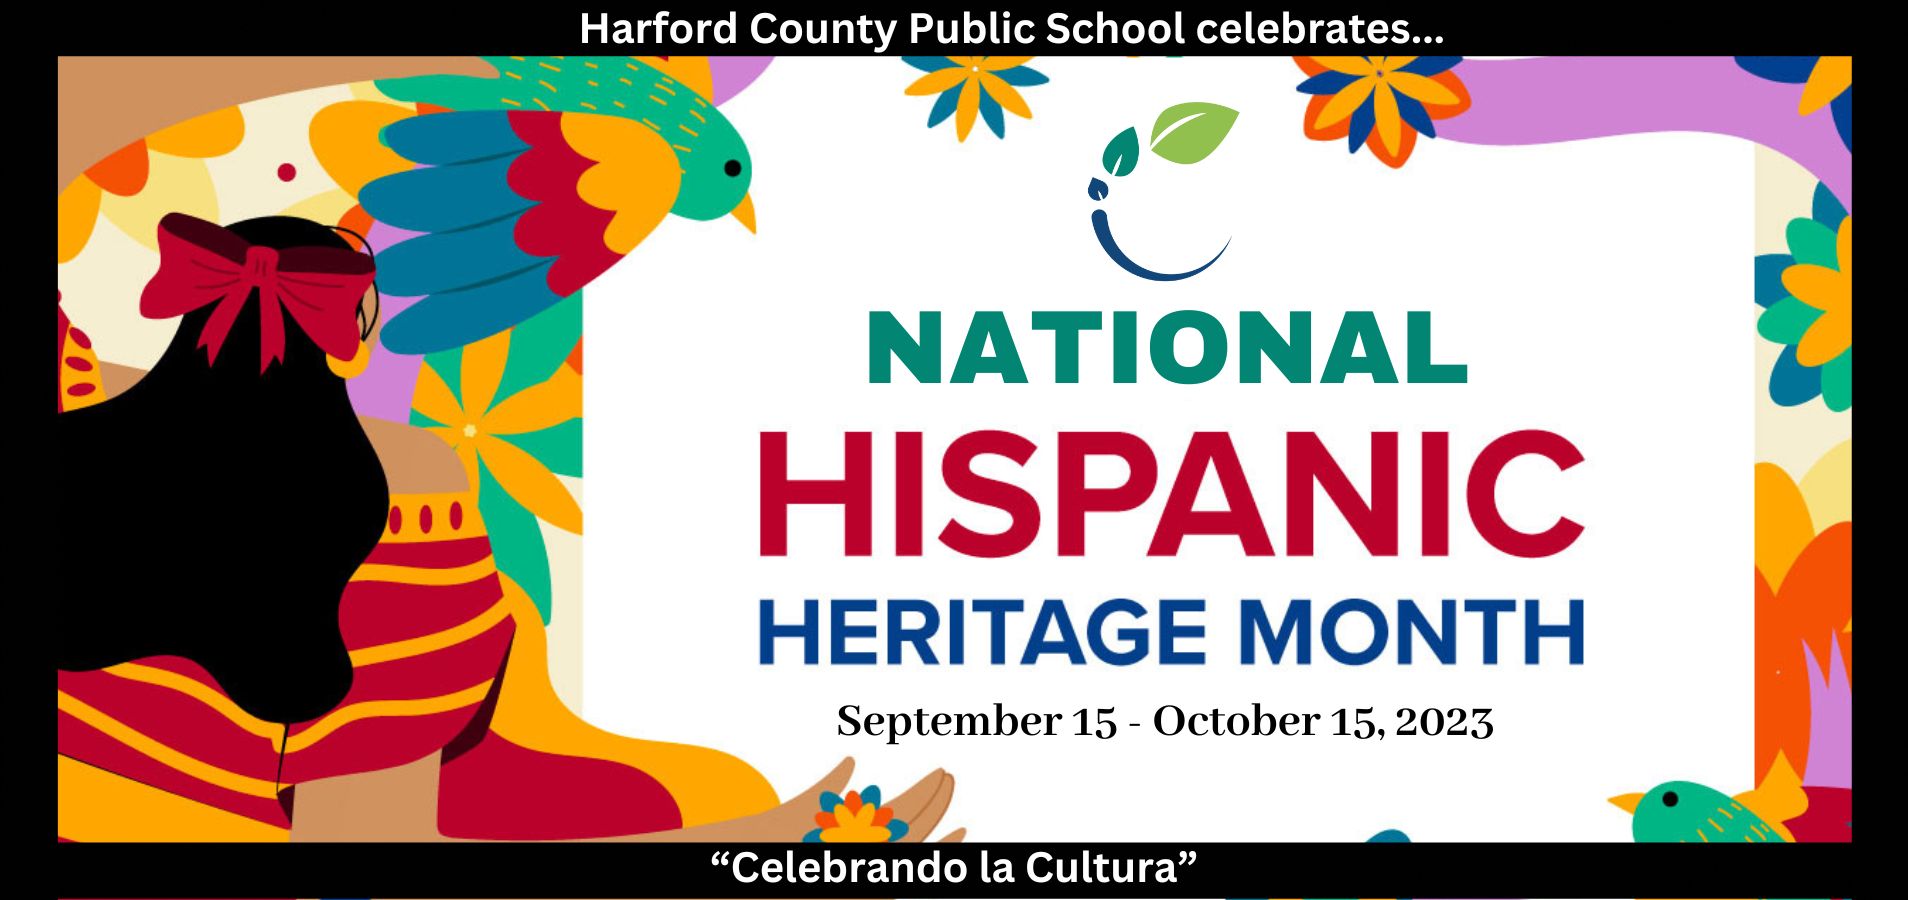 National Hispanic Heritage Month is September 15 through October 15, 2023